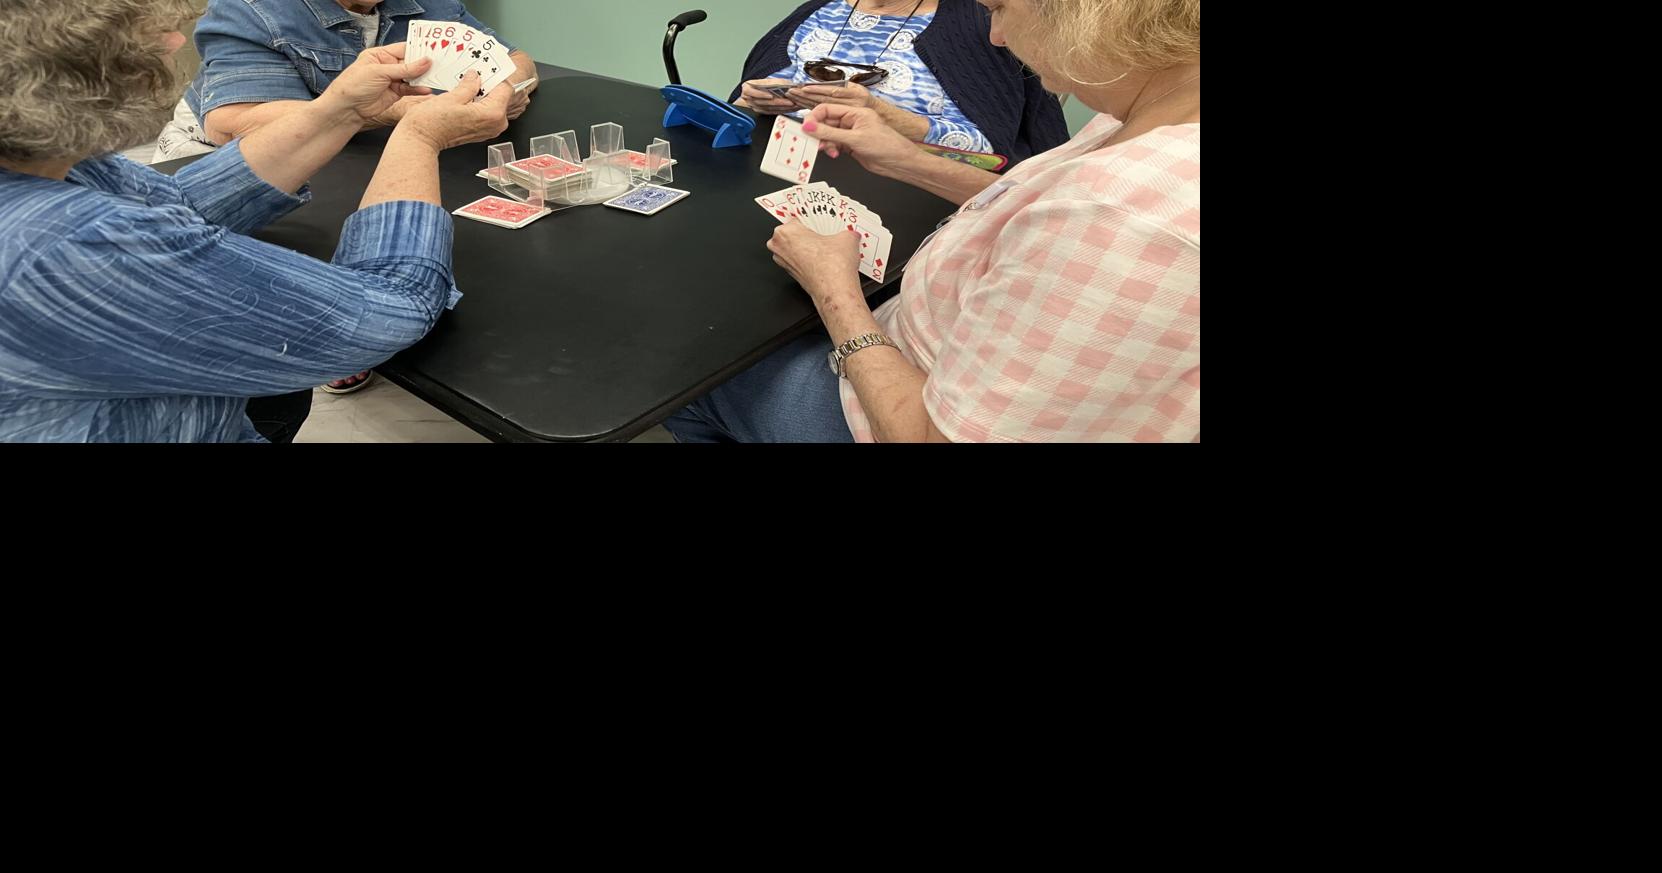 Florence senior center helps seniors age in comfort, News